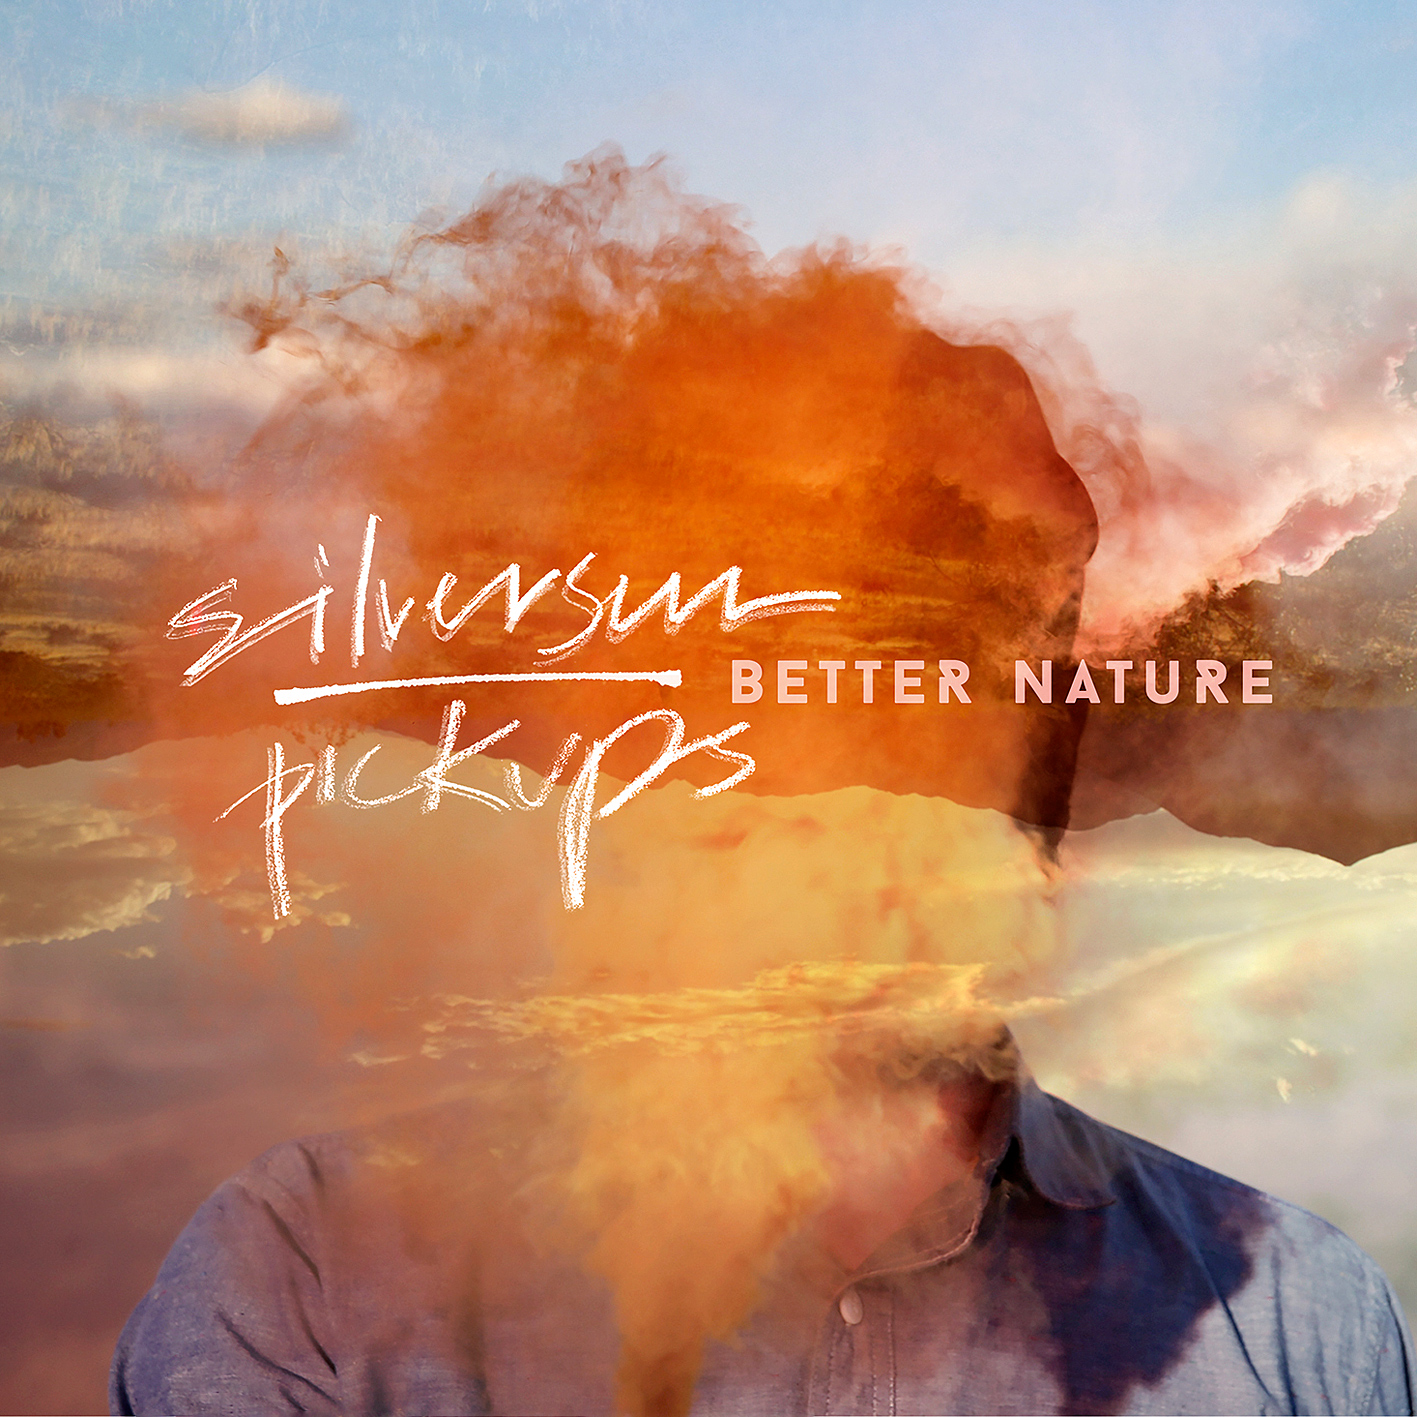 Silversun Pickups - Better Nature (2015) [Qobuz FLAC 24bit/48kHz]